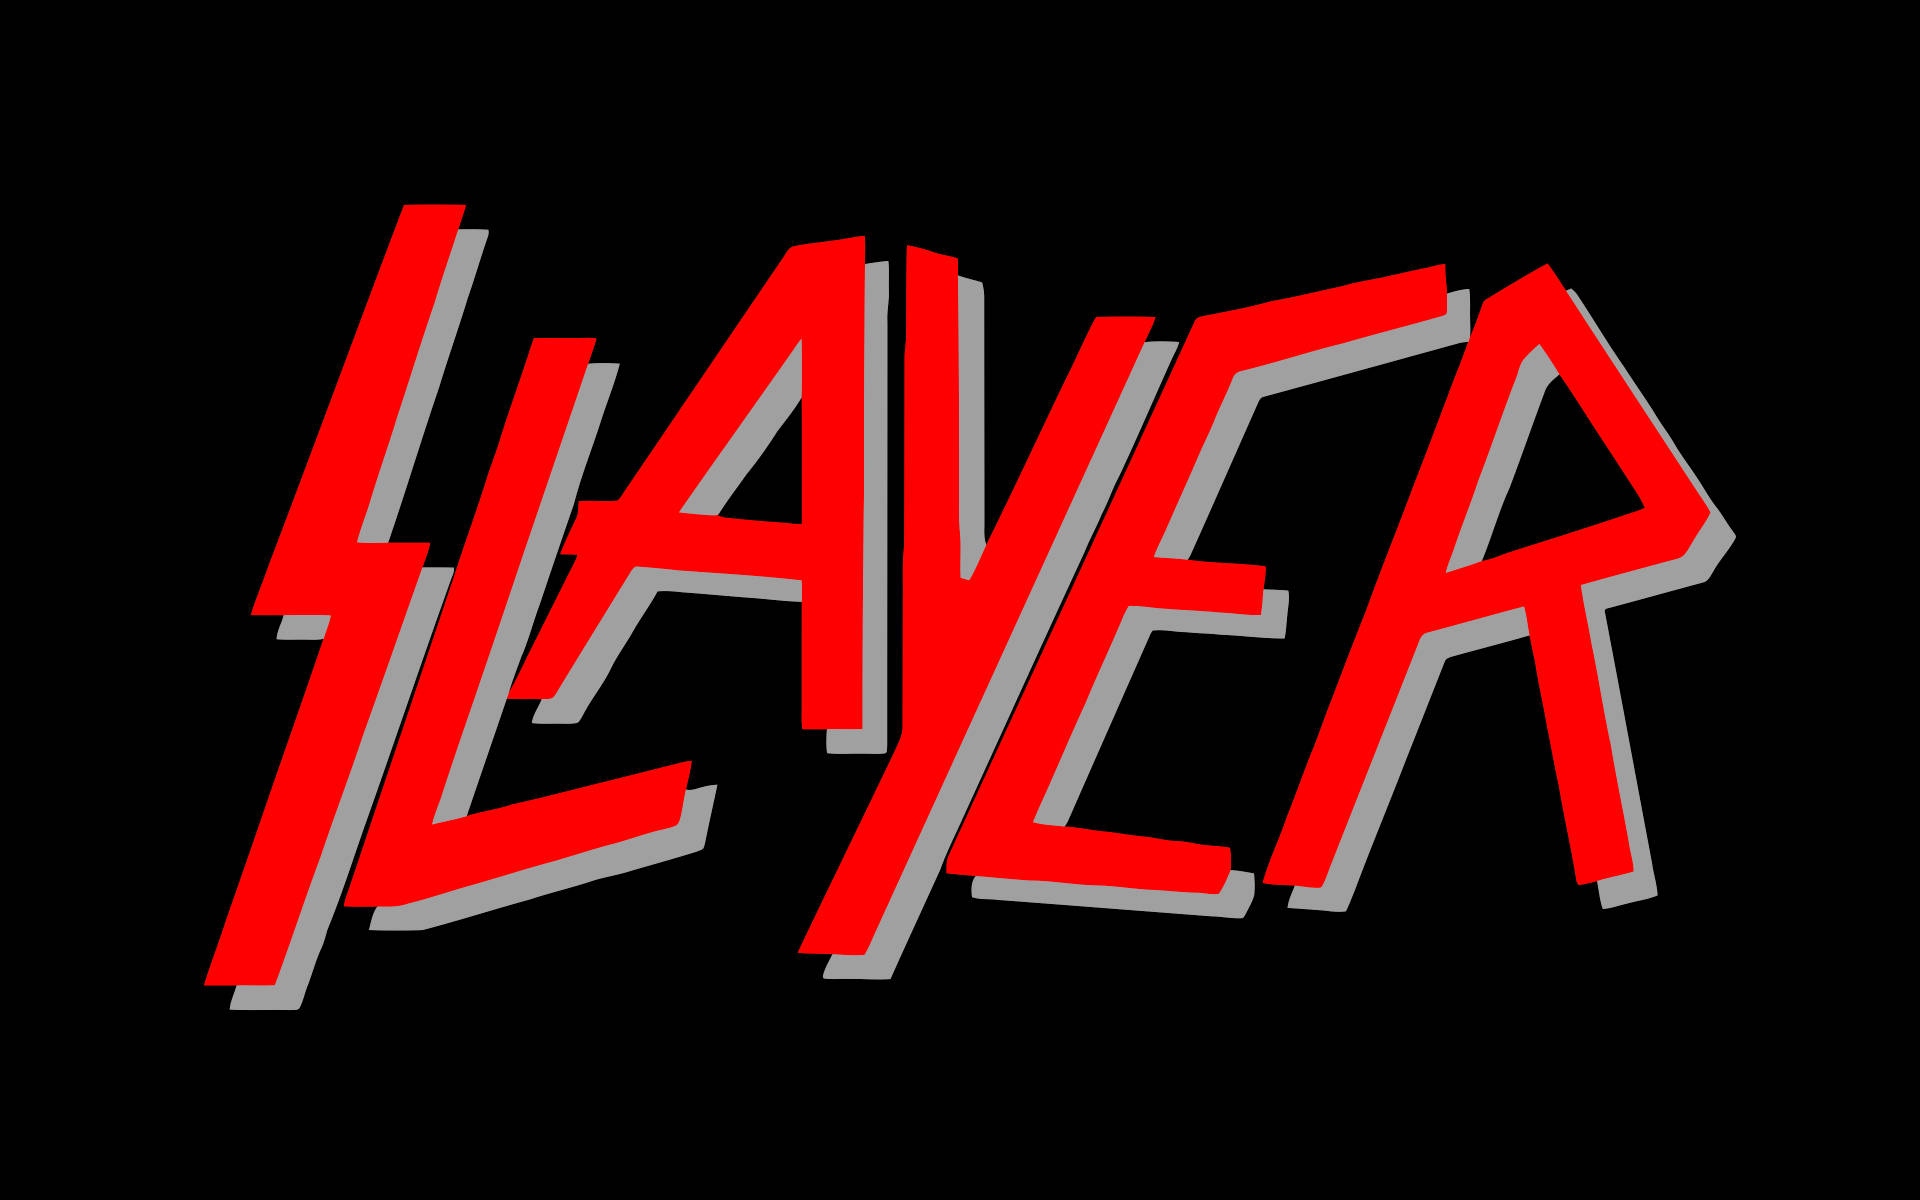 Red Neon Slayer Logo Wallpaper